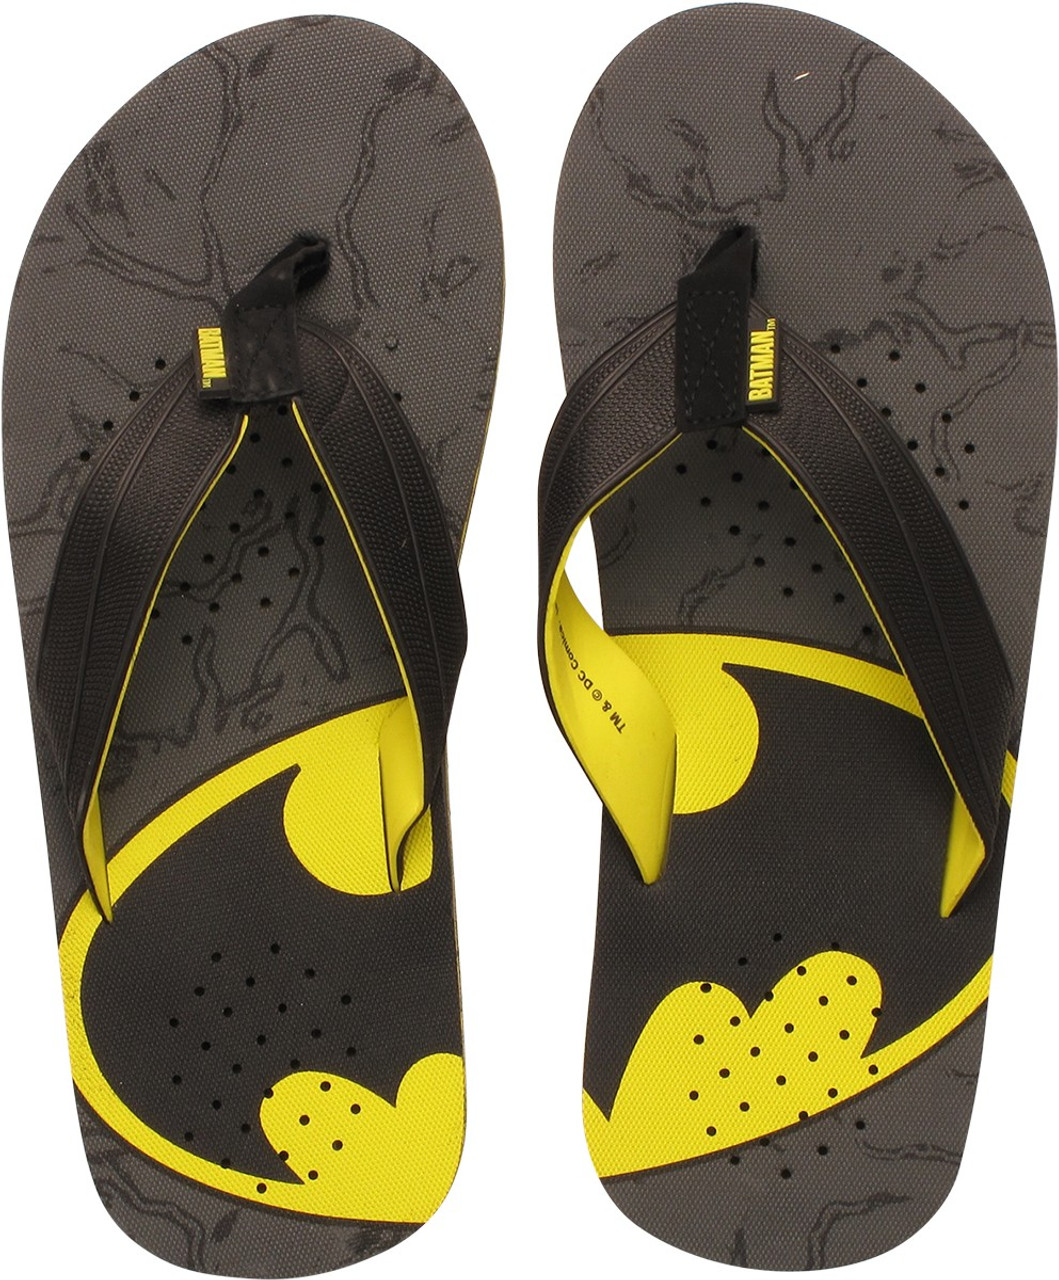 batman sandals for adults